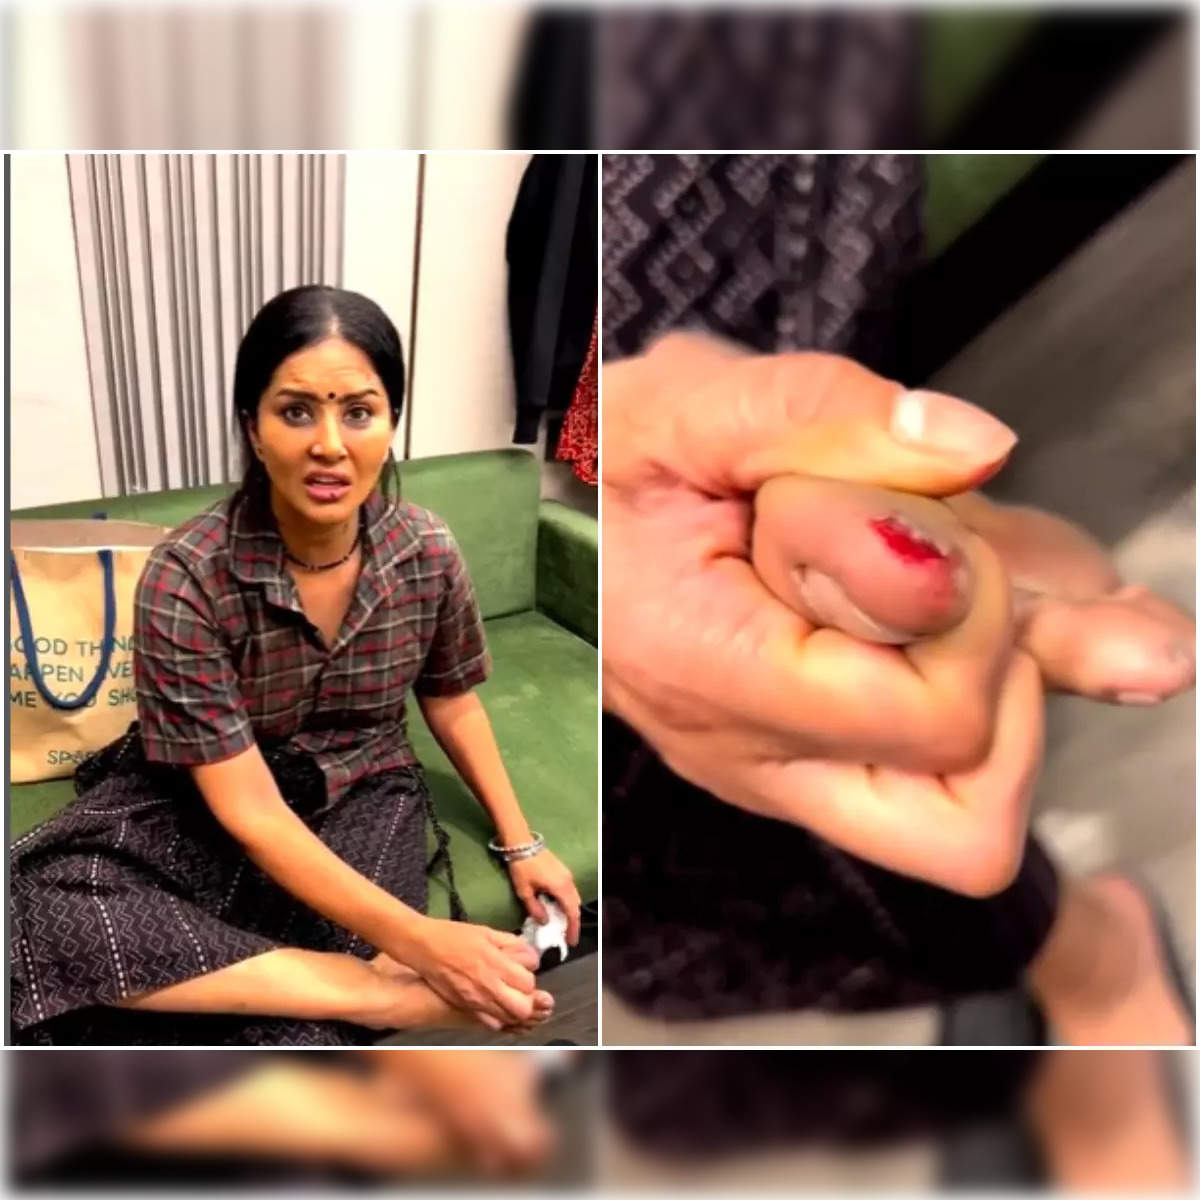 Sanny Levan Sixy Video - Sunny Leone Film Set: Sunny Leone gets hurt on movie set, posts video - The  Economic Times